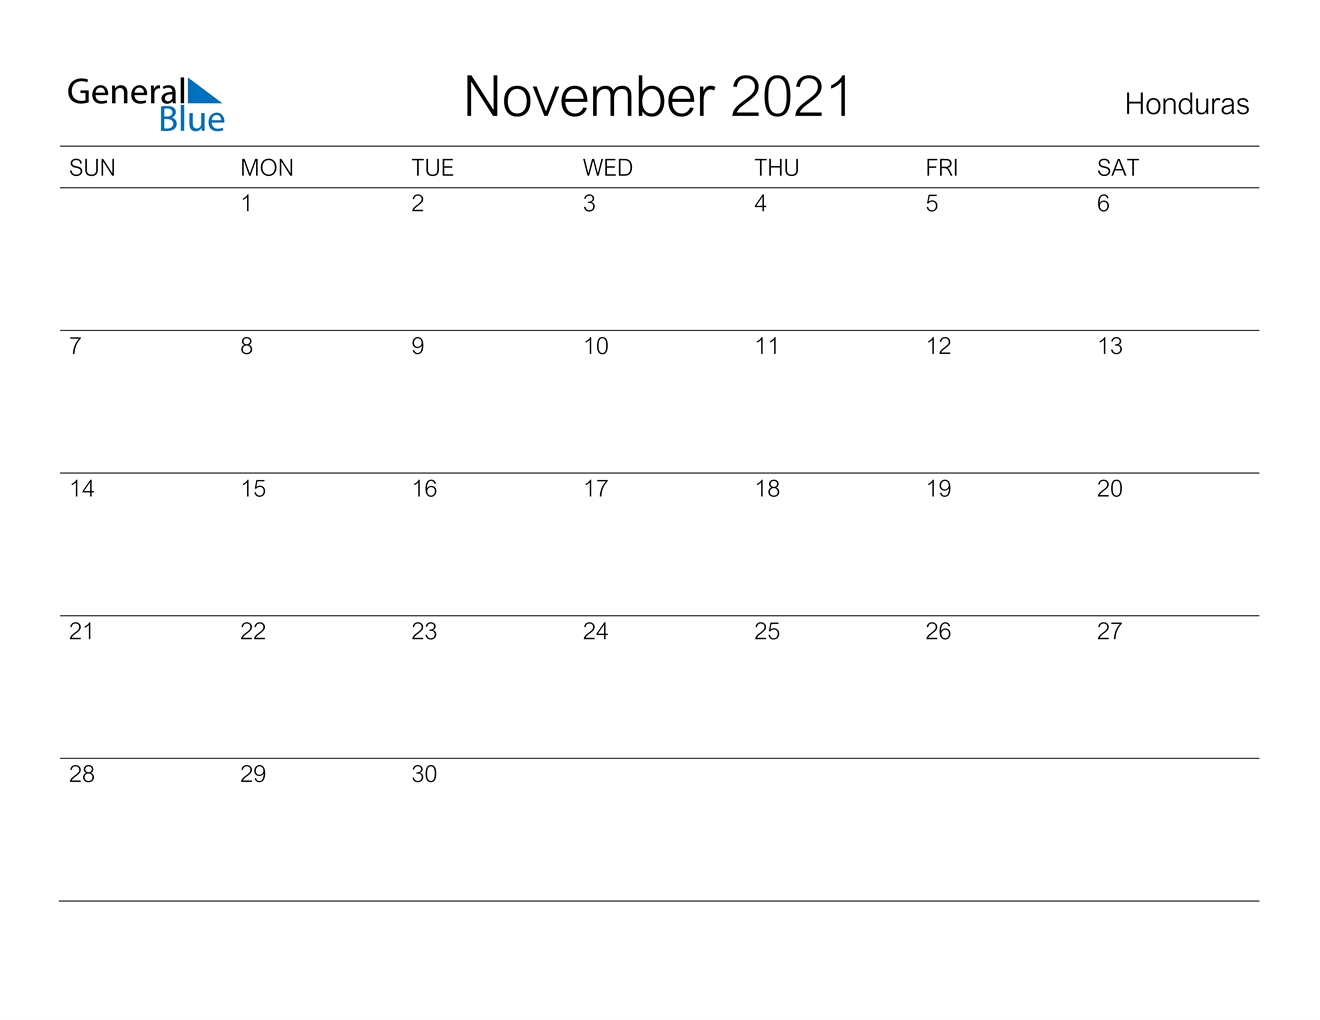 November 2021 Calendar - Honduras